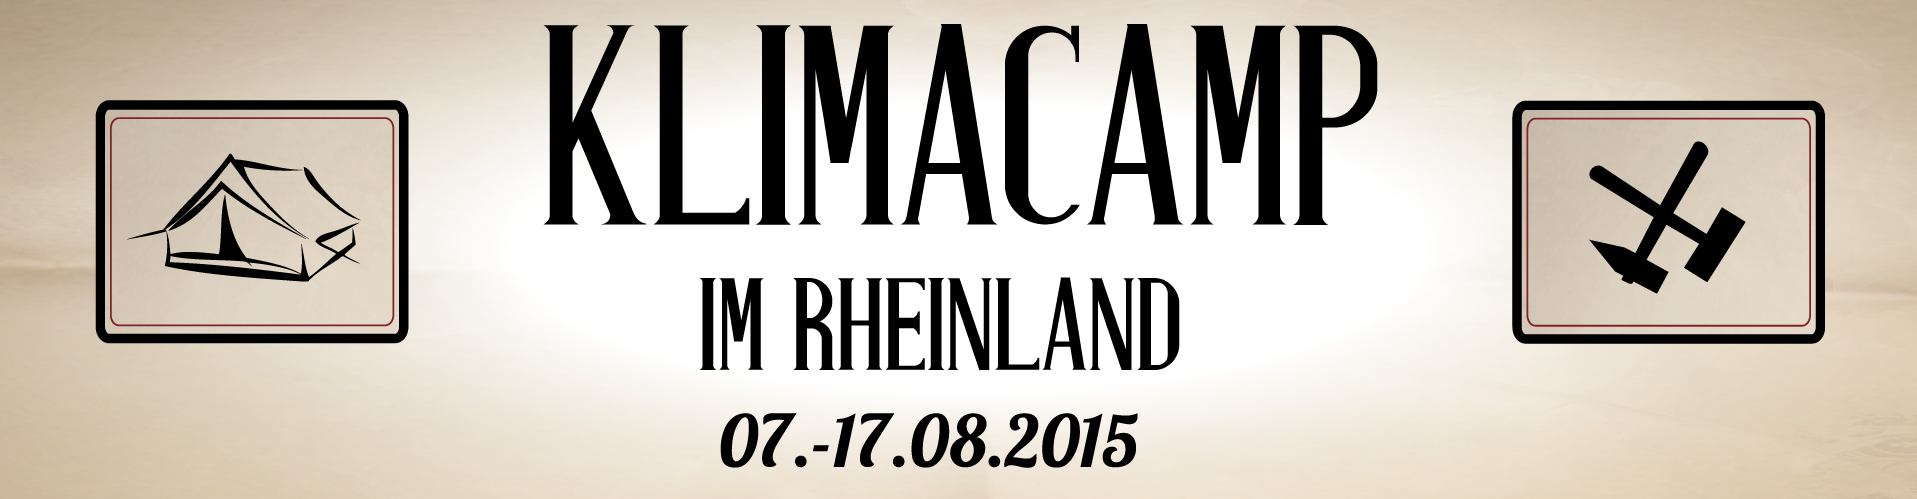 cropped-Klimacamp-header-2015medium